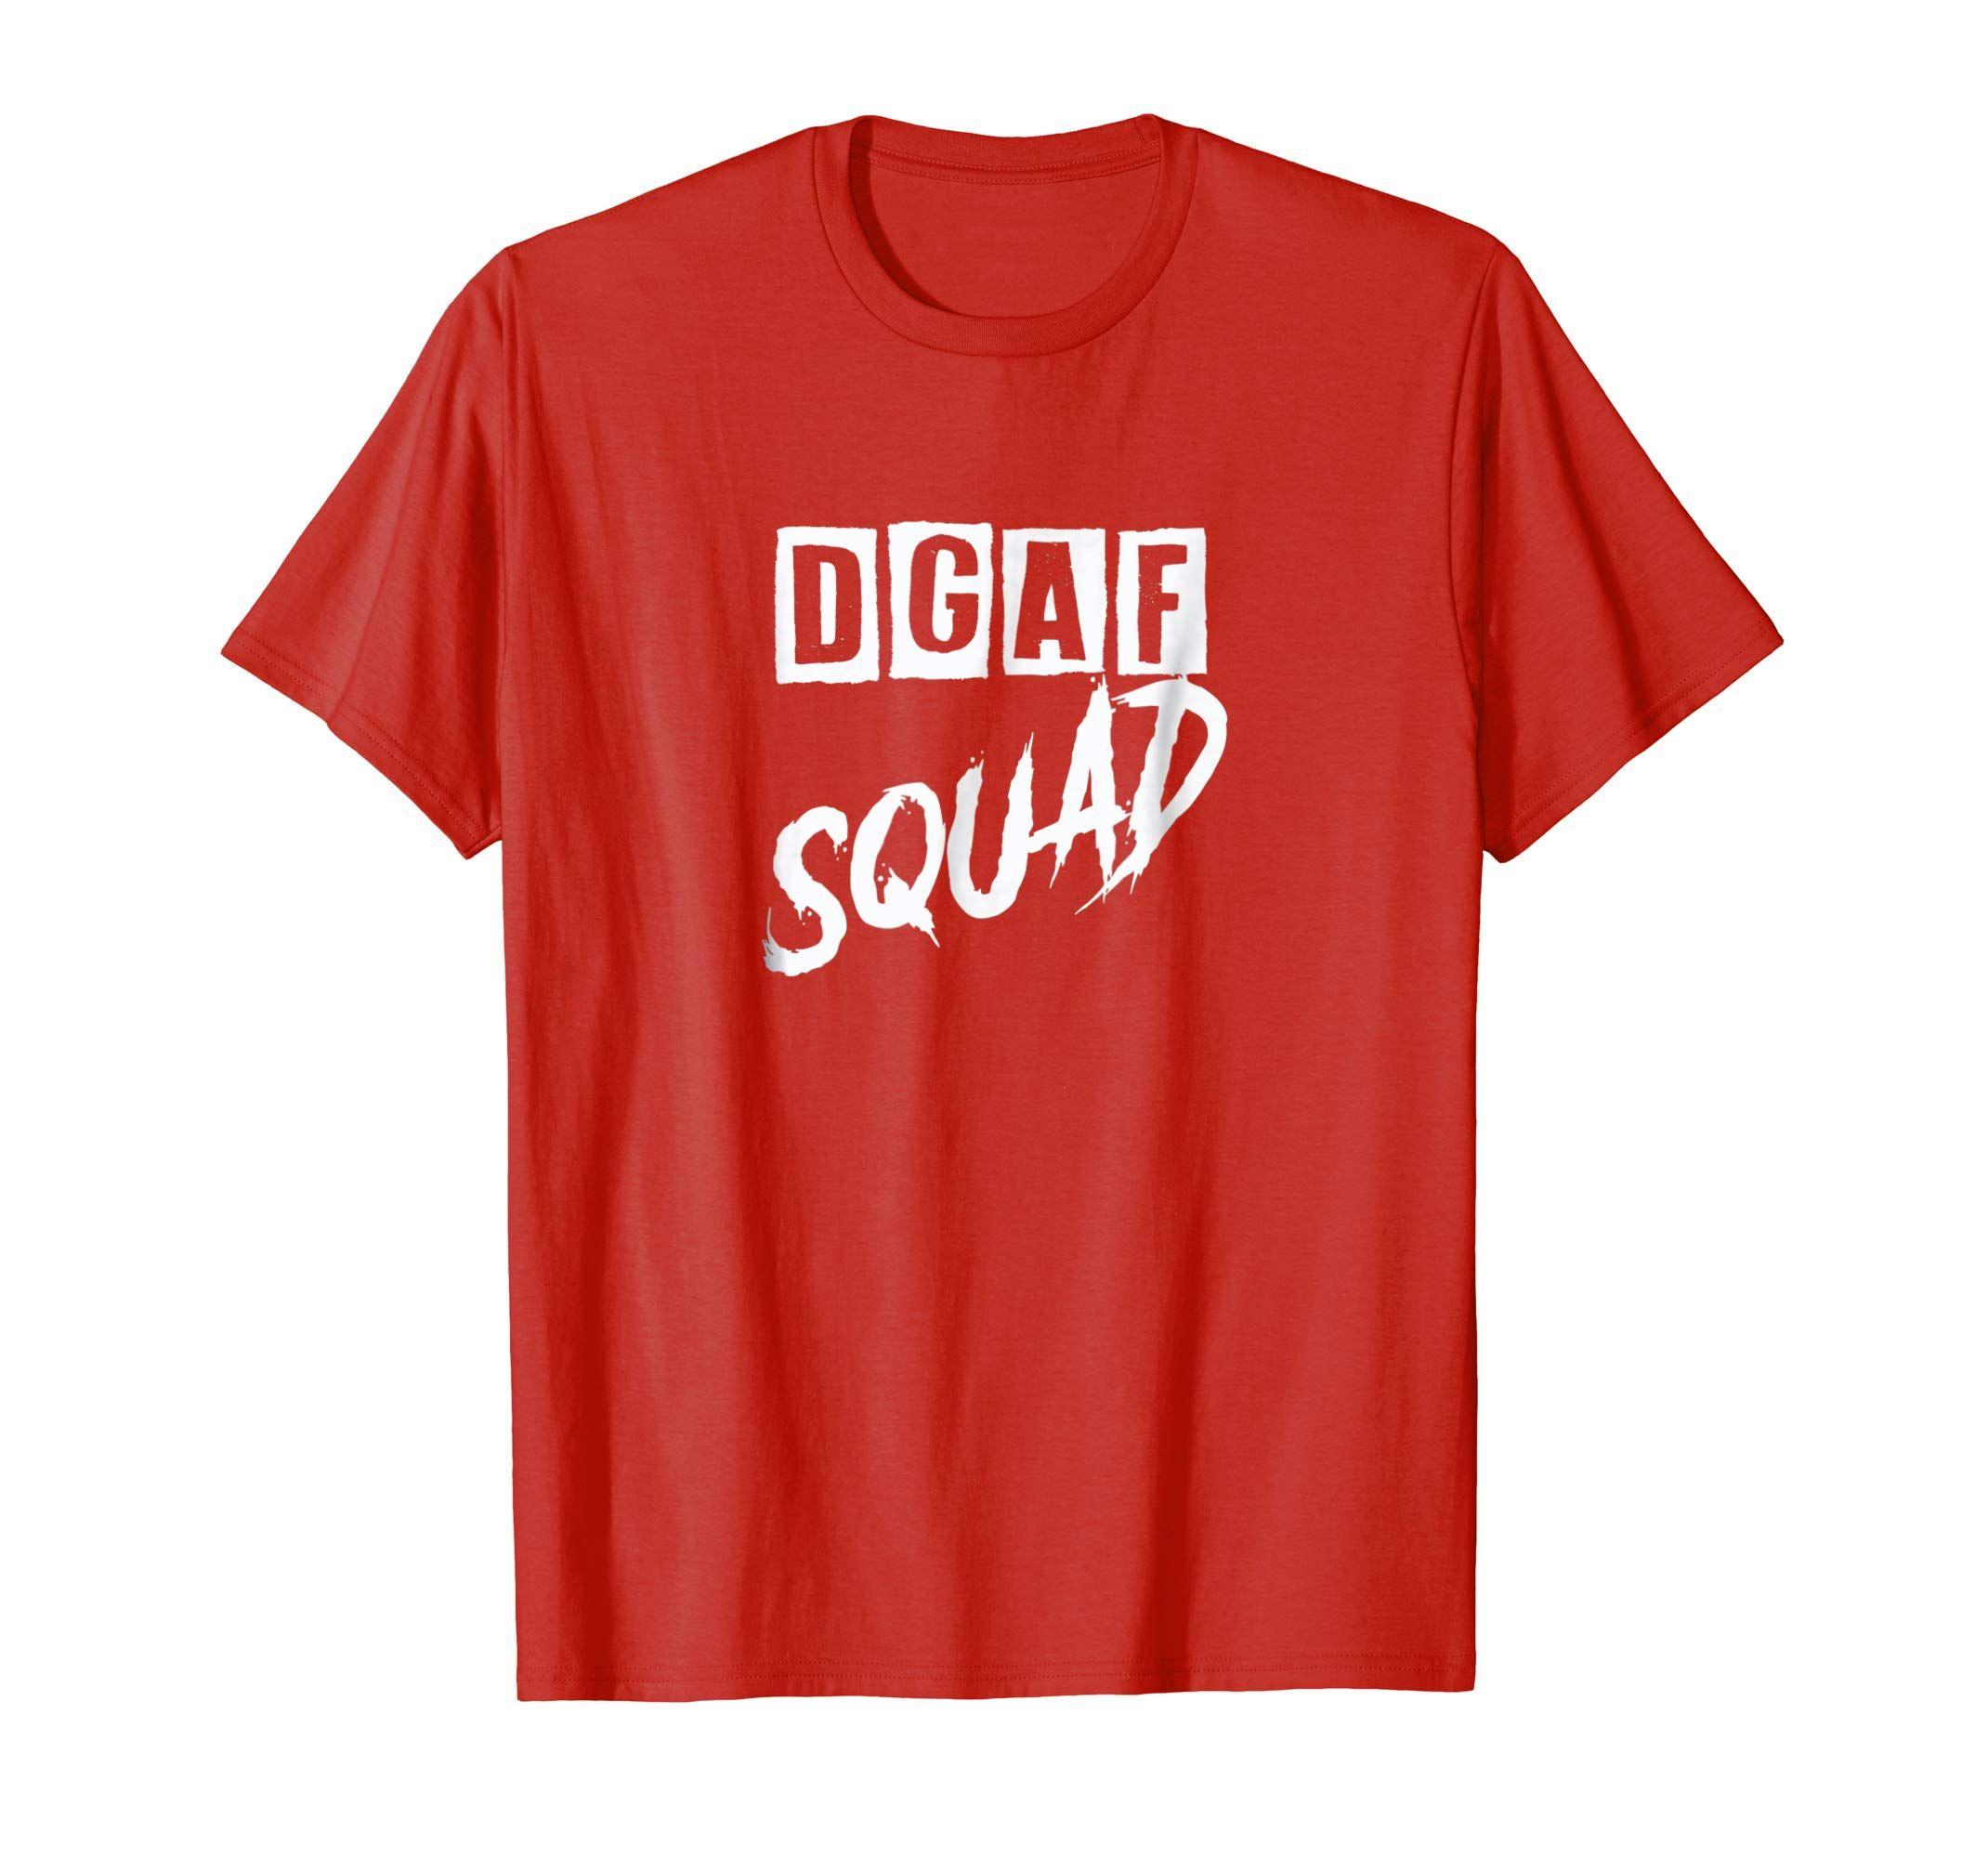 Dgaf Logo - Amazon.com: DGAF Squad T-Shirt: Clothing